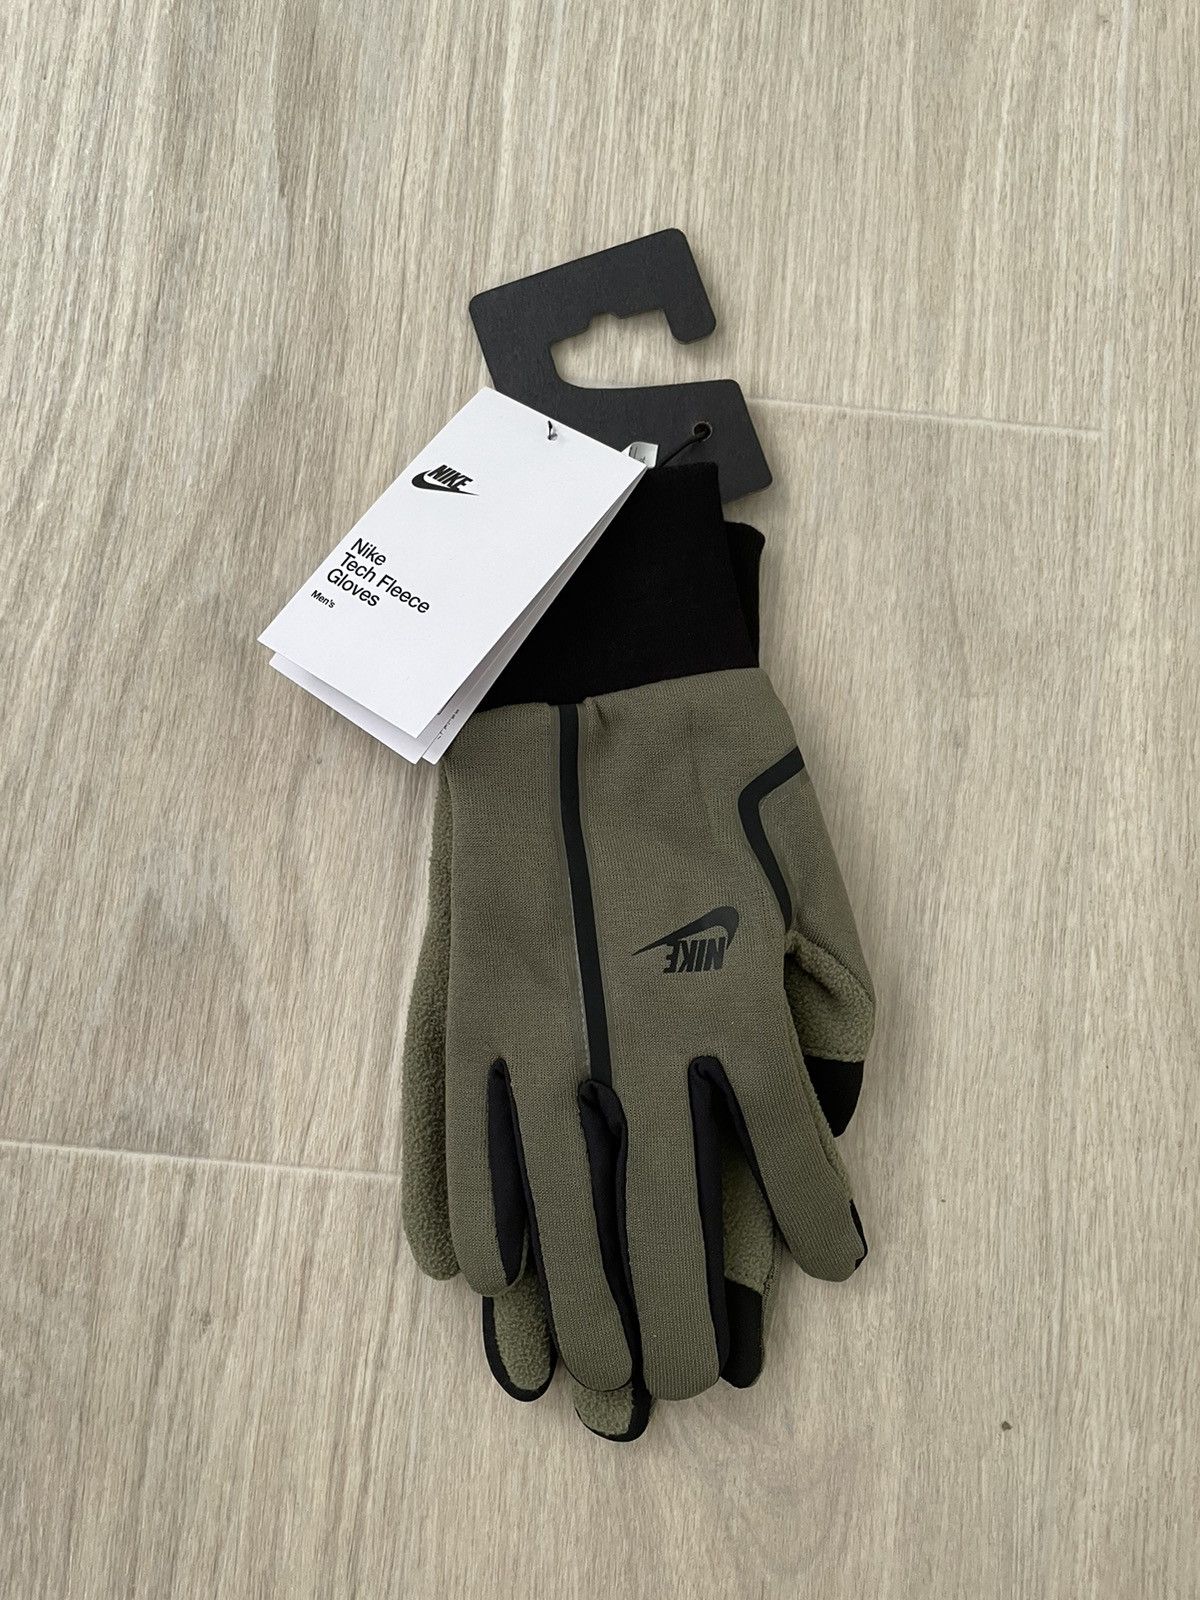 Nike Nike tech fleece gloves | Grailed